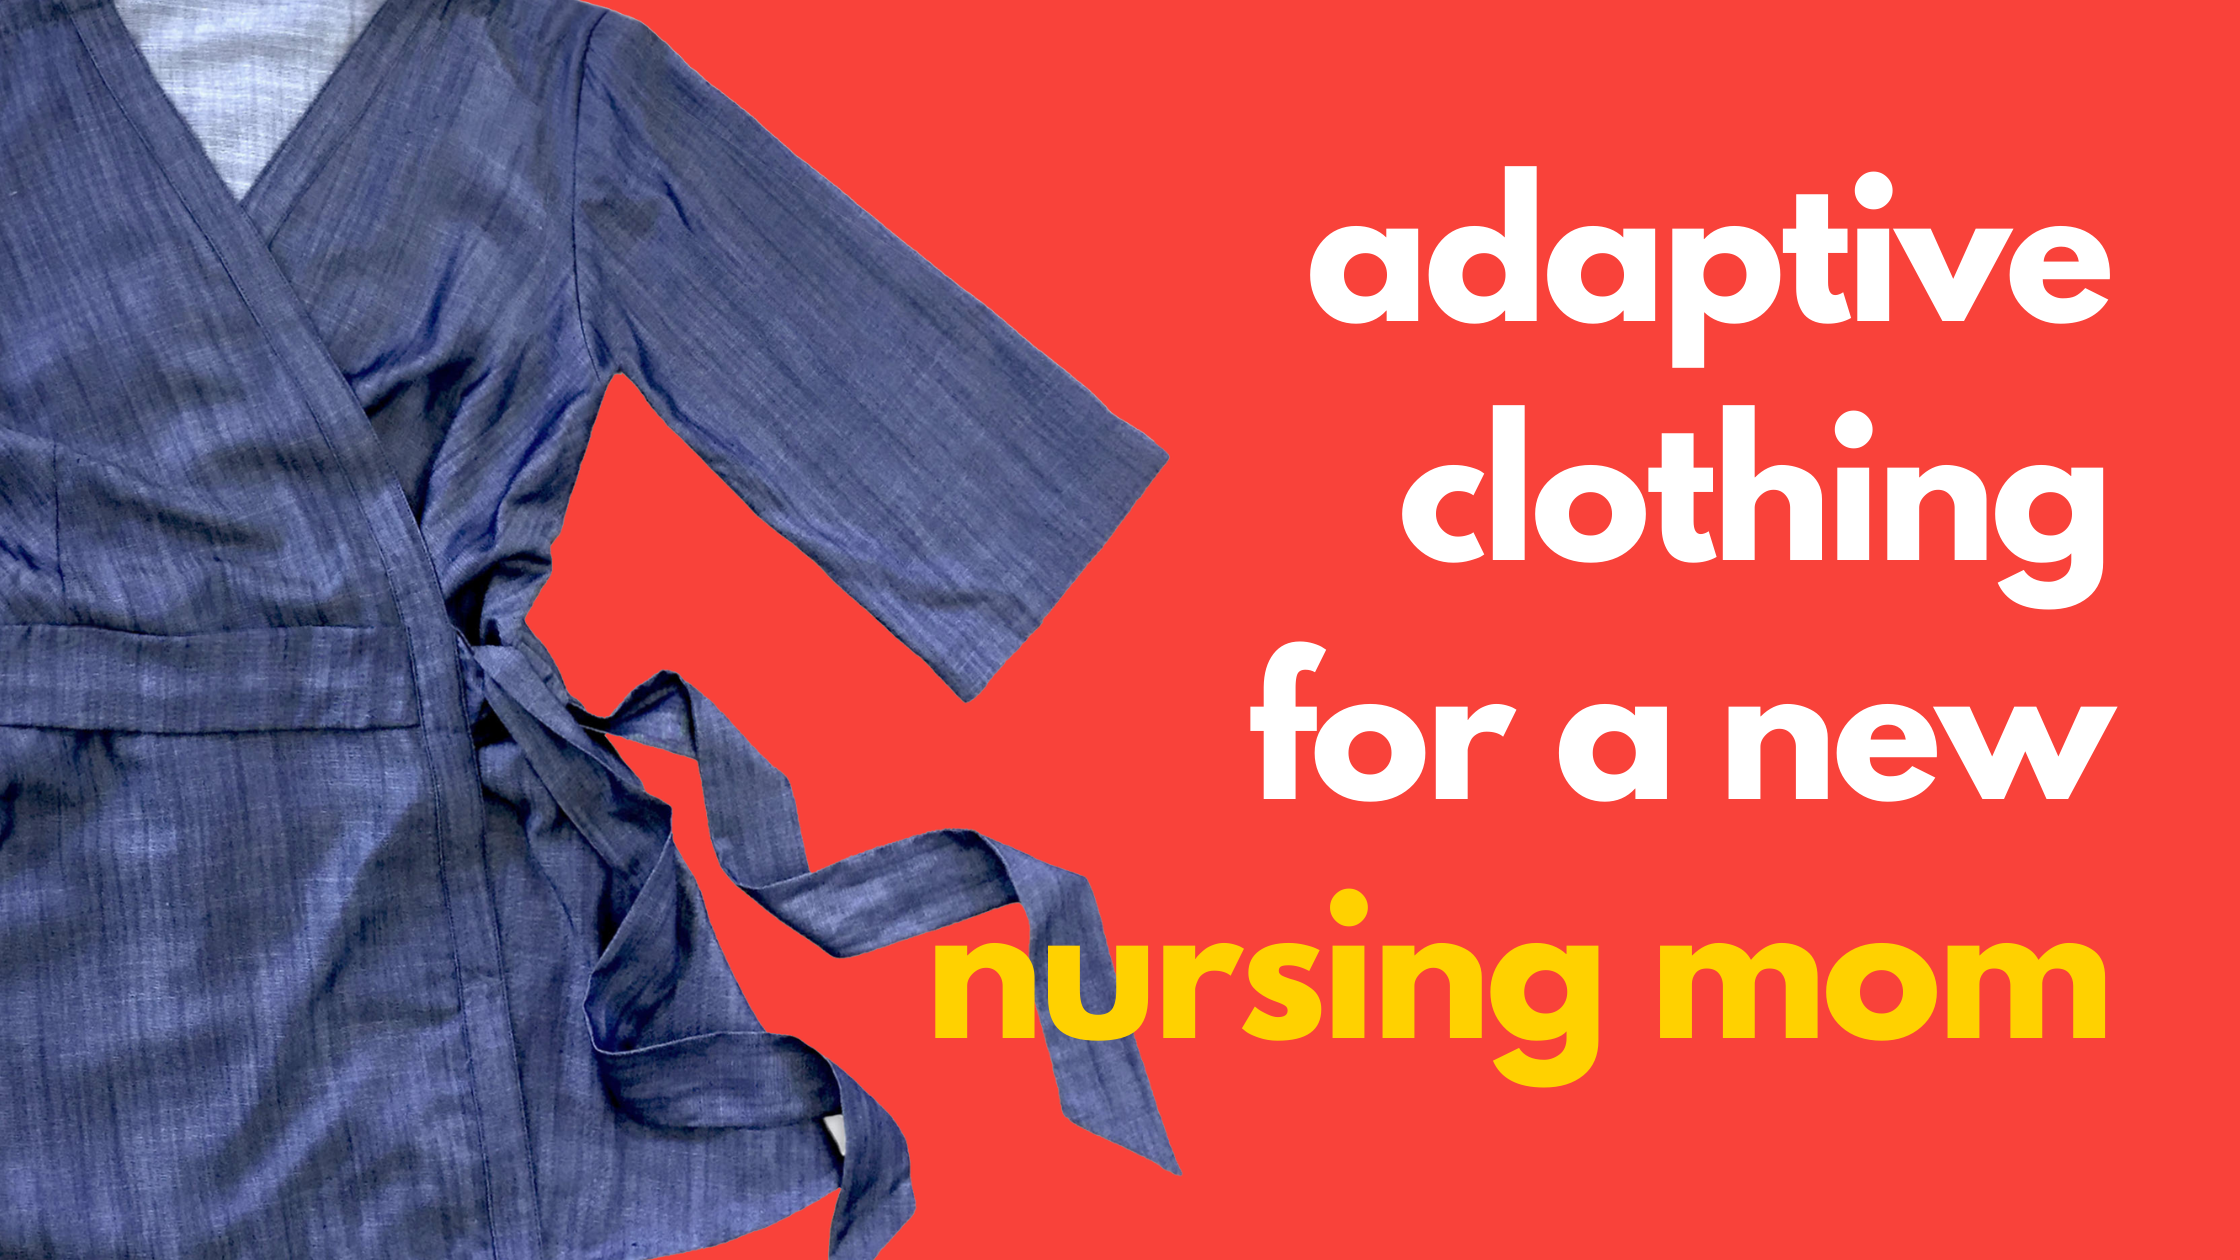 Adaptive clothing for a new nursing mom